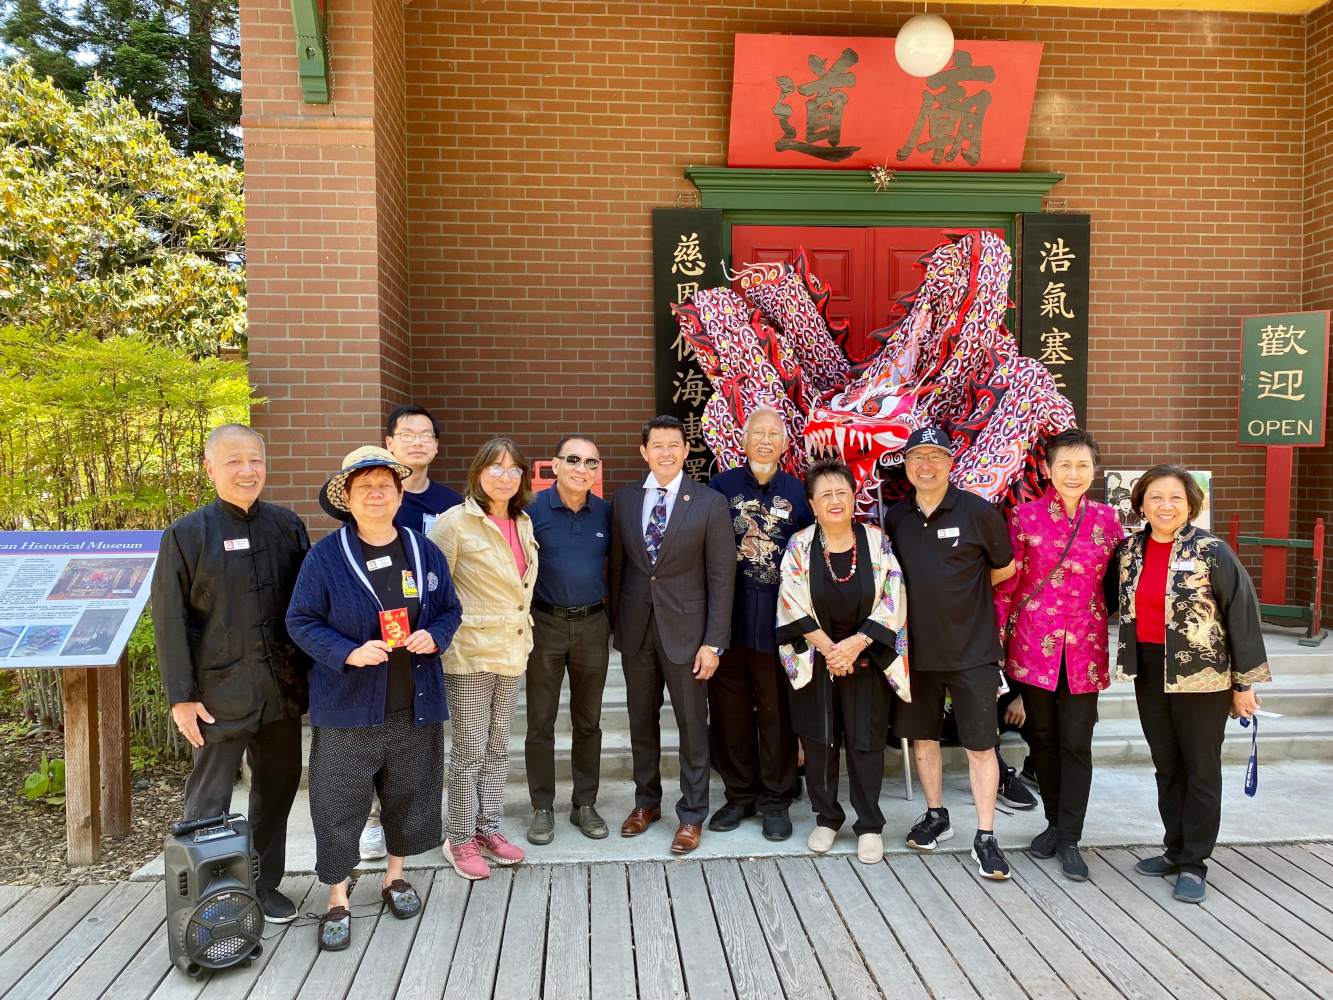 Rising Phoenix Dragon Dancers at Chinese American Historical Museum